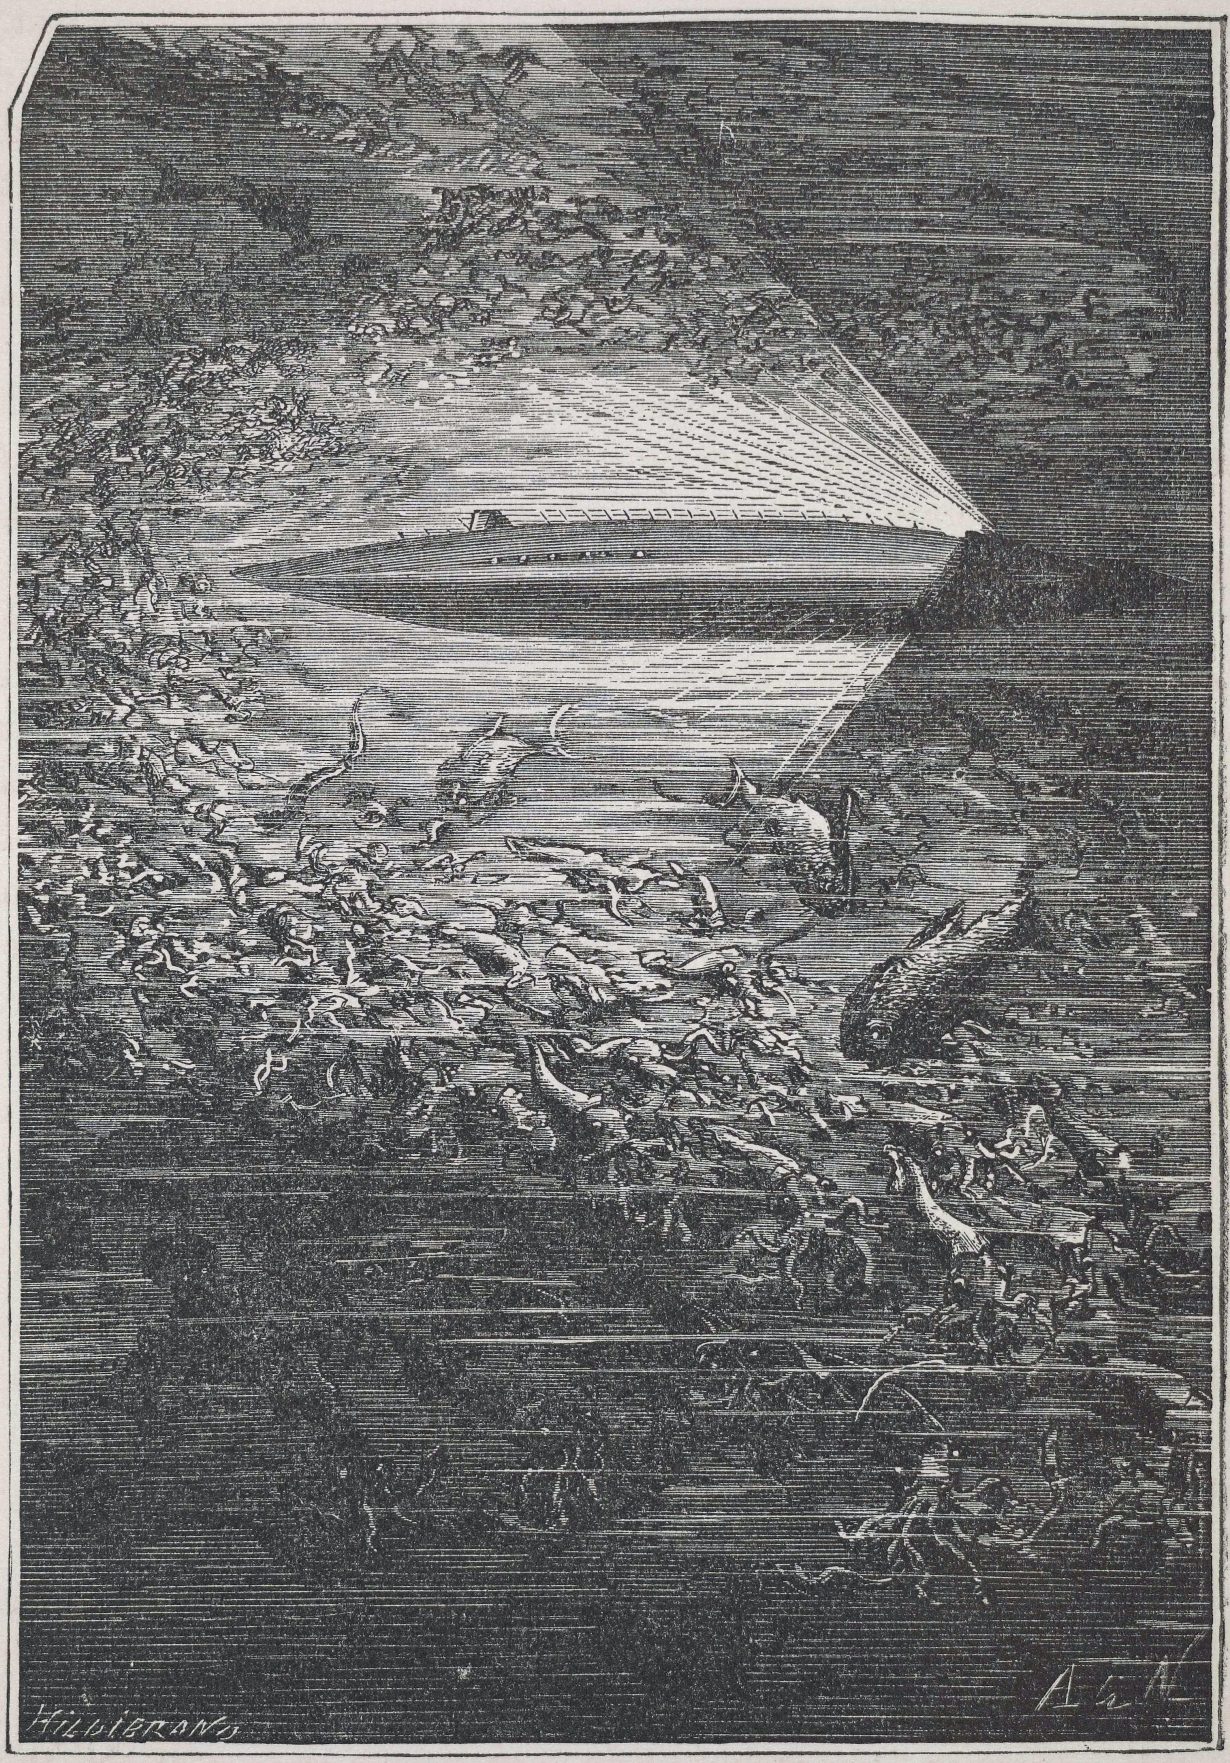 Alphonse Marie de Neuville, illustration from Twenty Thousand Leagues Under the Seas, 1869-70